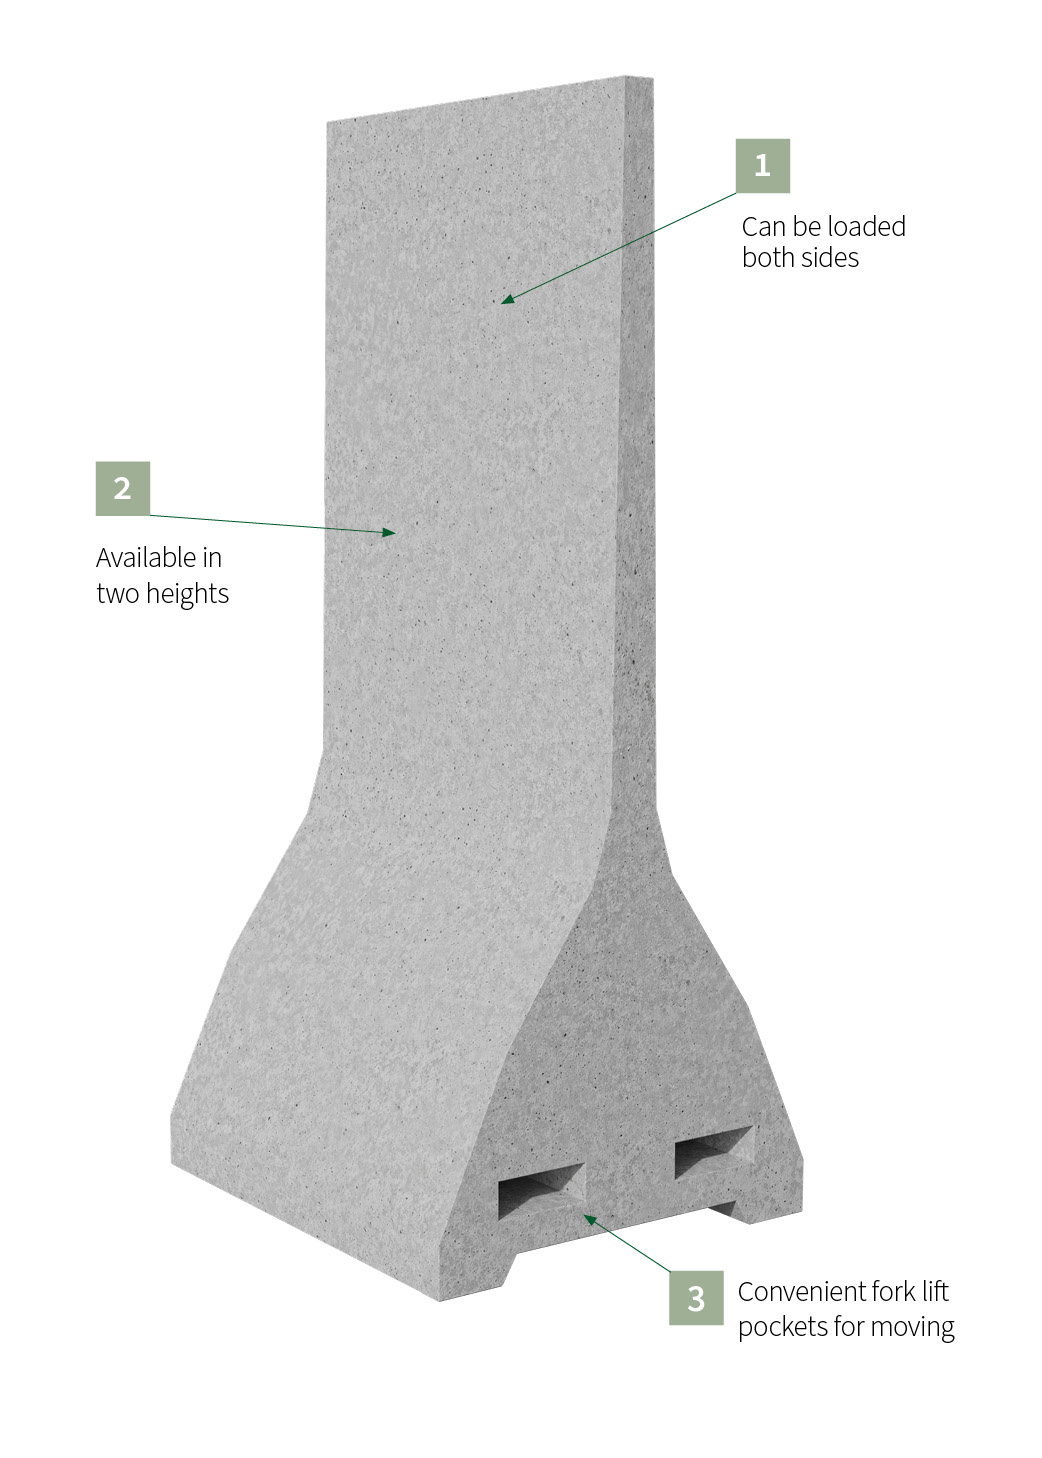 Taperbloc™ XL freestanding precast concrete retaining wall